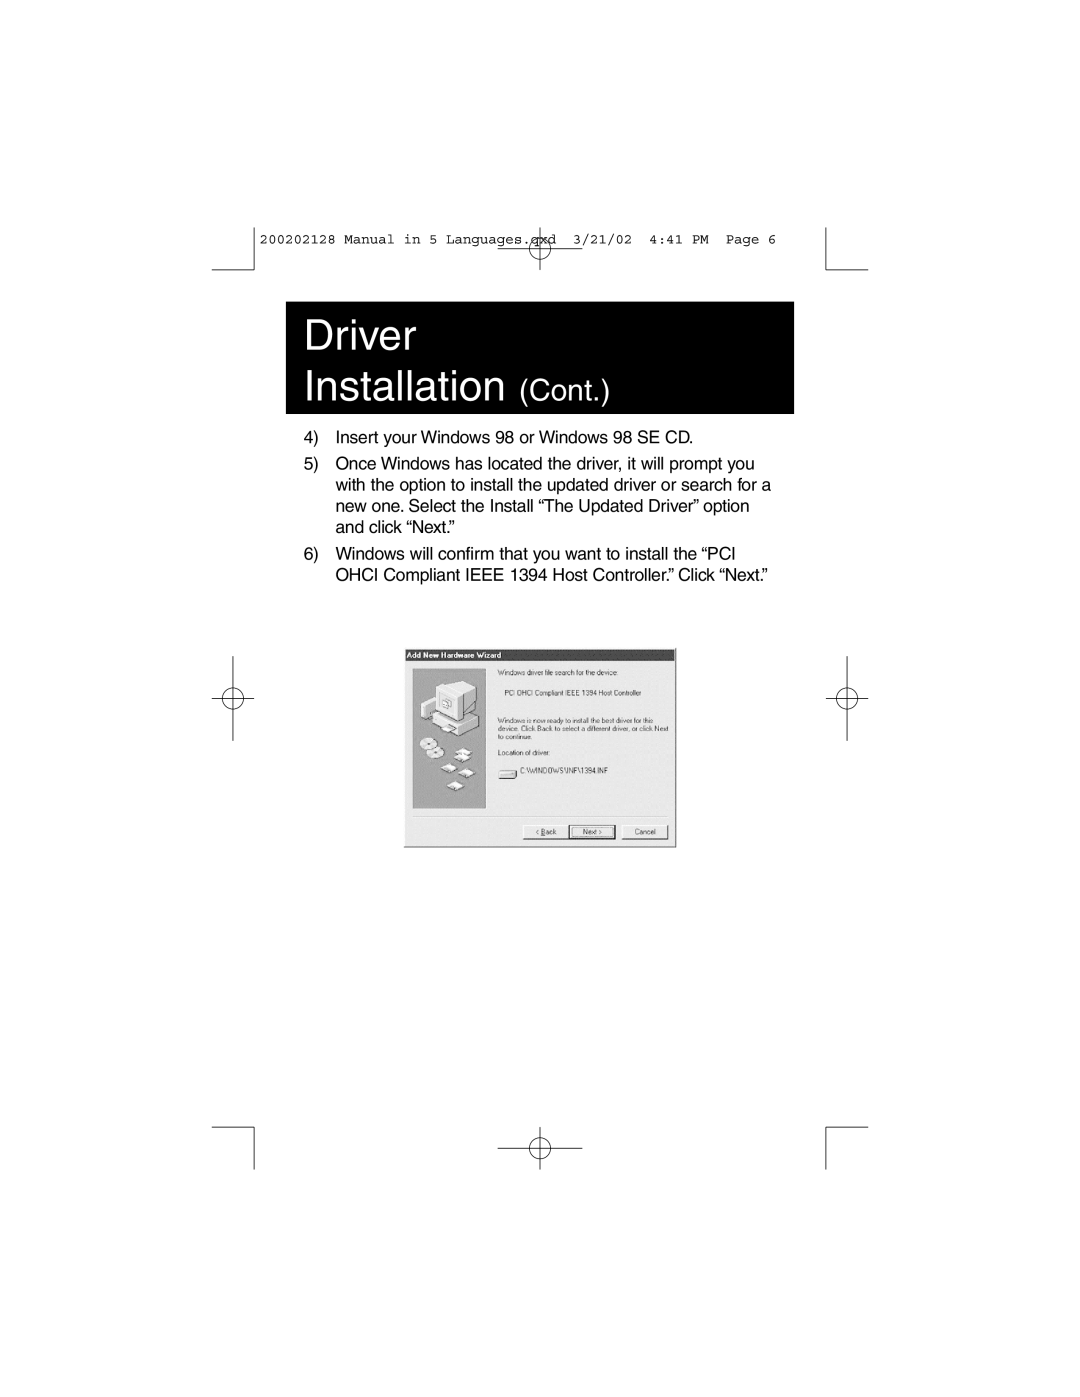 Tripp Lite F200-003-R user manual Driver Installation Cont, Insert your Windows 98 or Windows 98 SE CD 